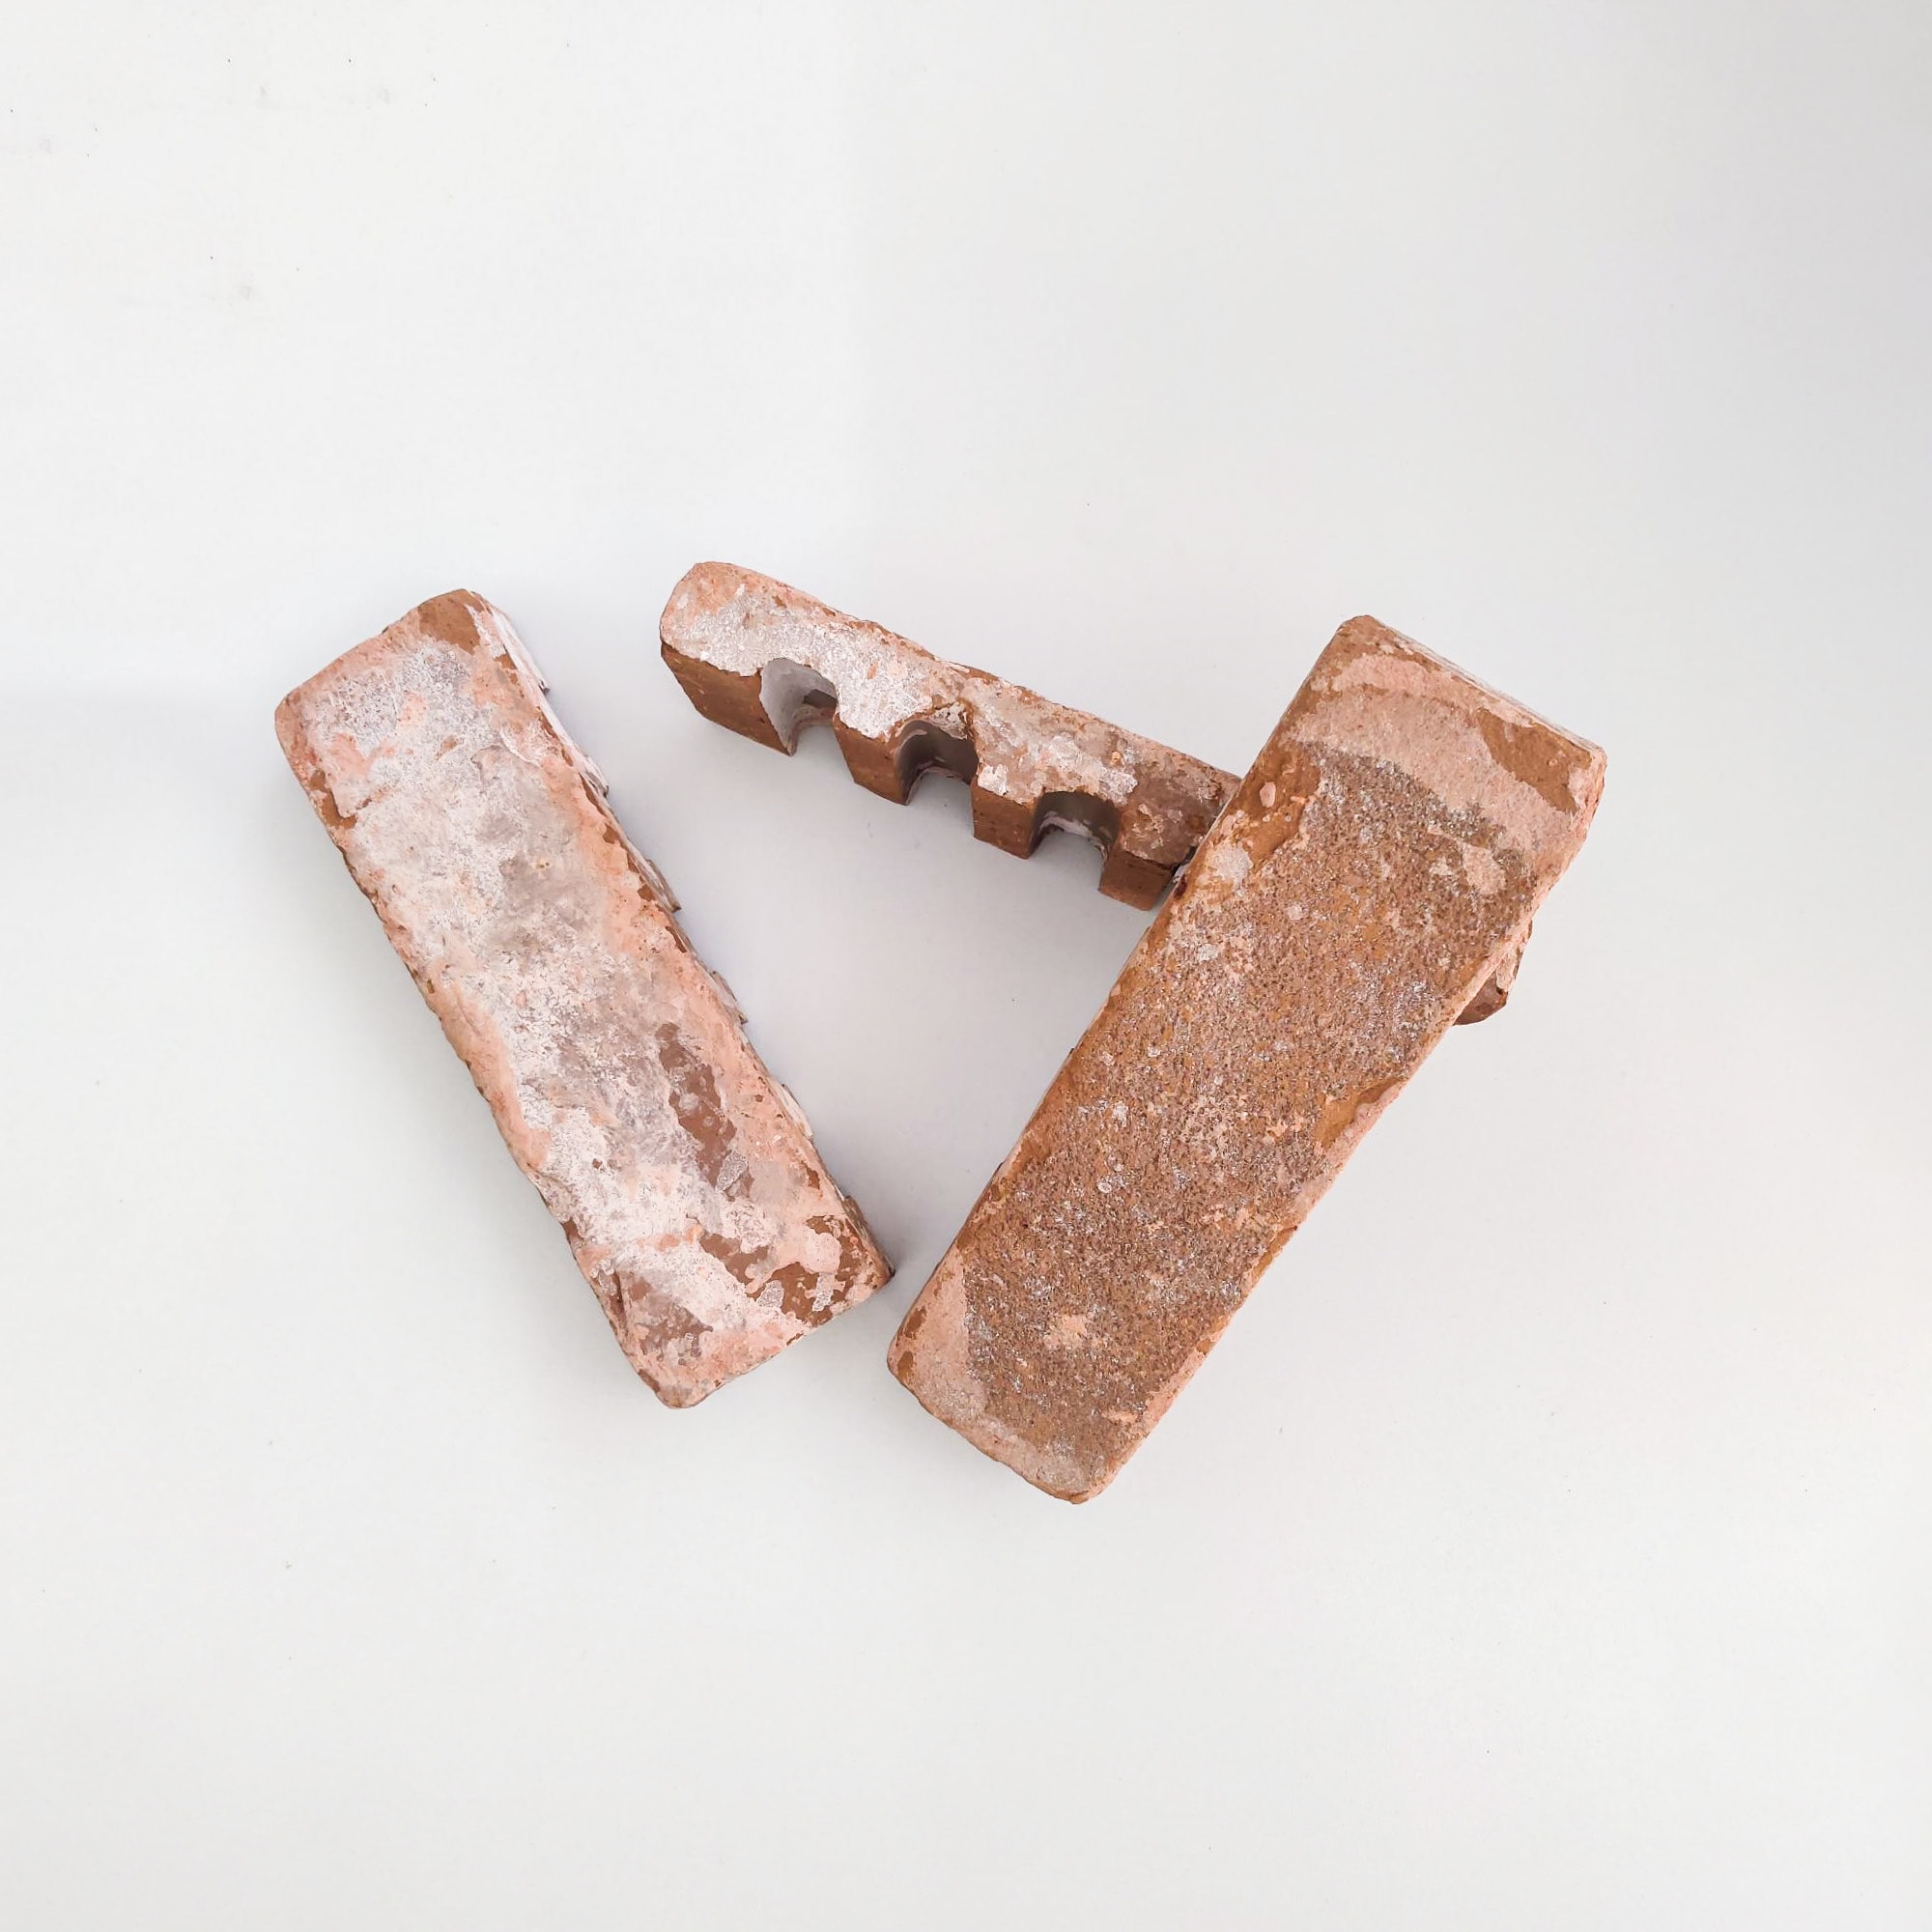 Precast reflections range of sustainable clay bricks